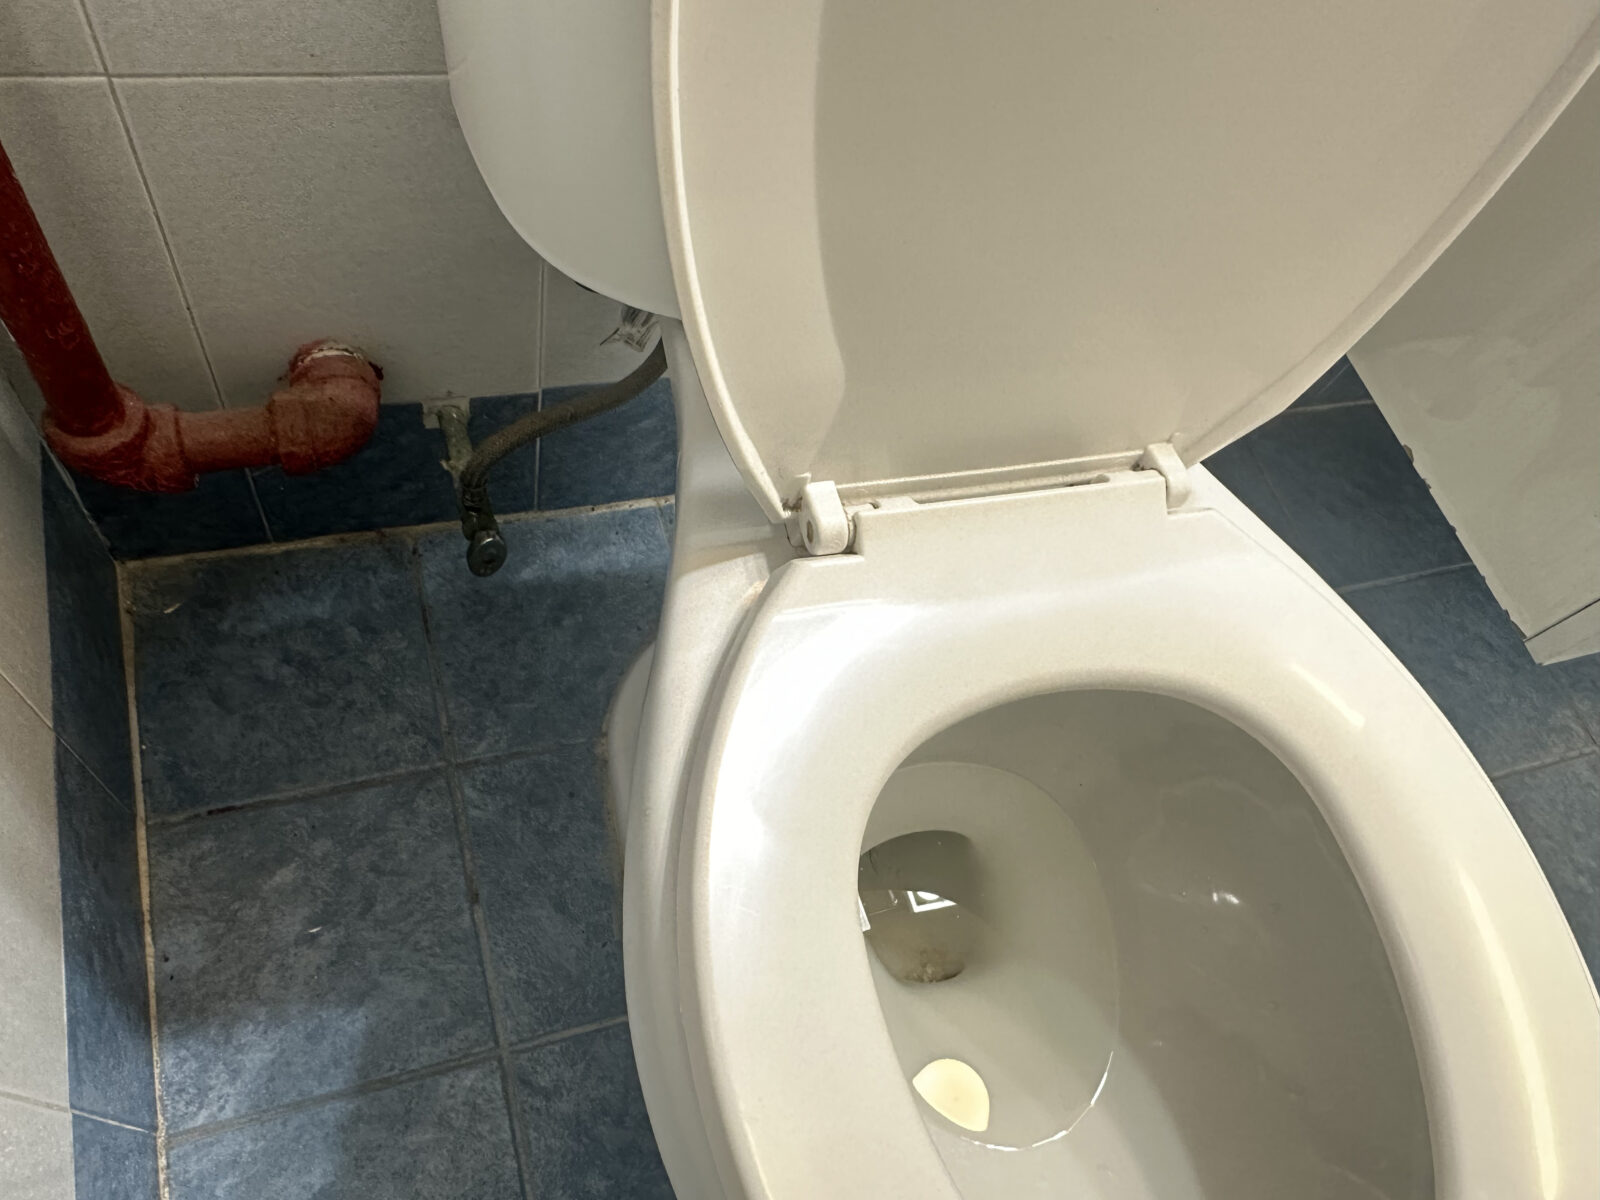 Shut off valve for a toilet bowl.